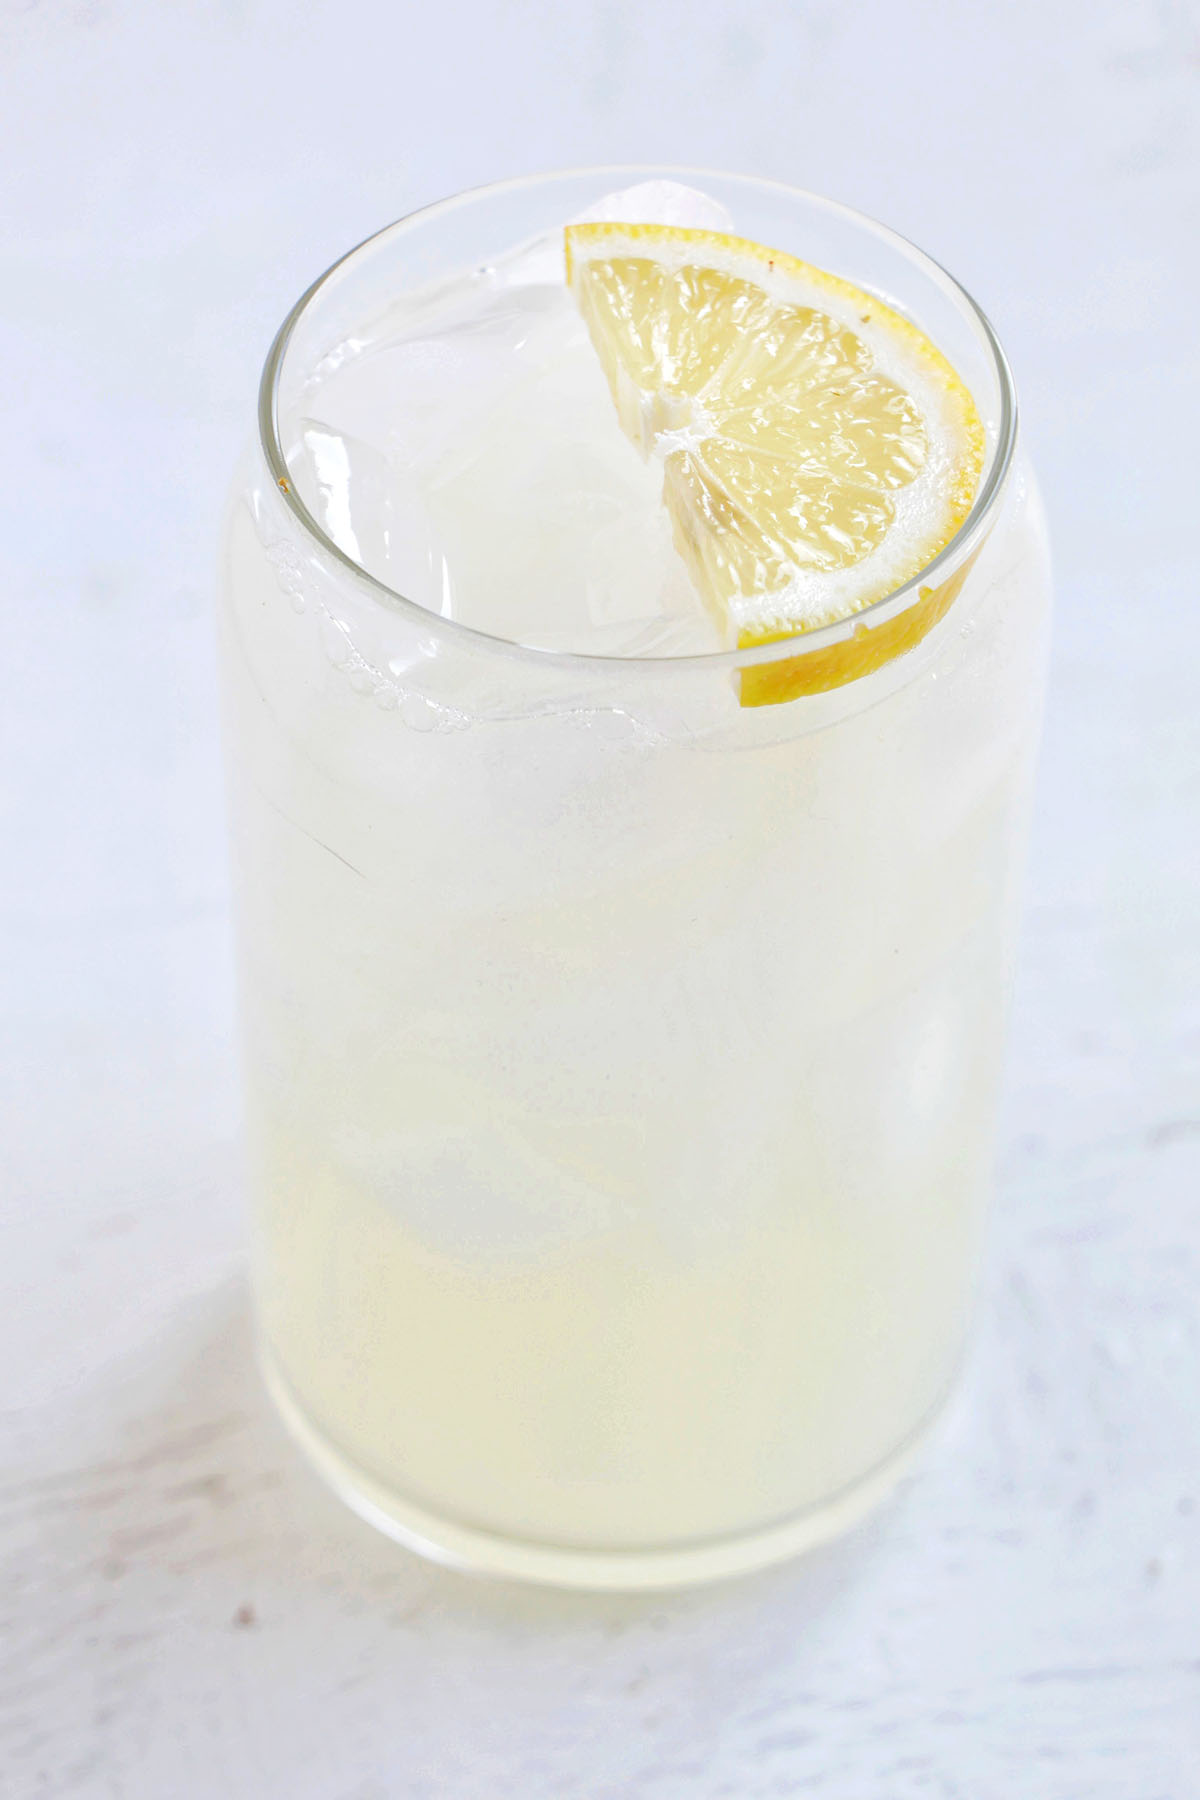 gin and lemonade with lemon garnish.